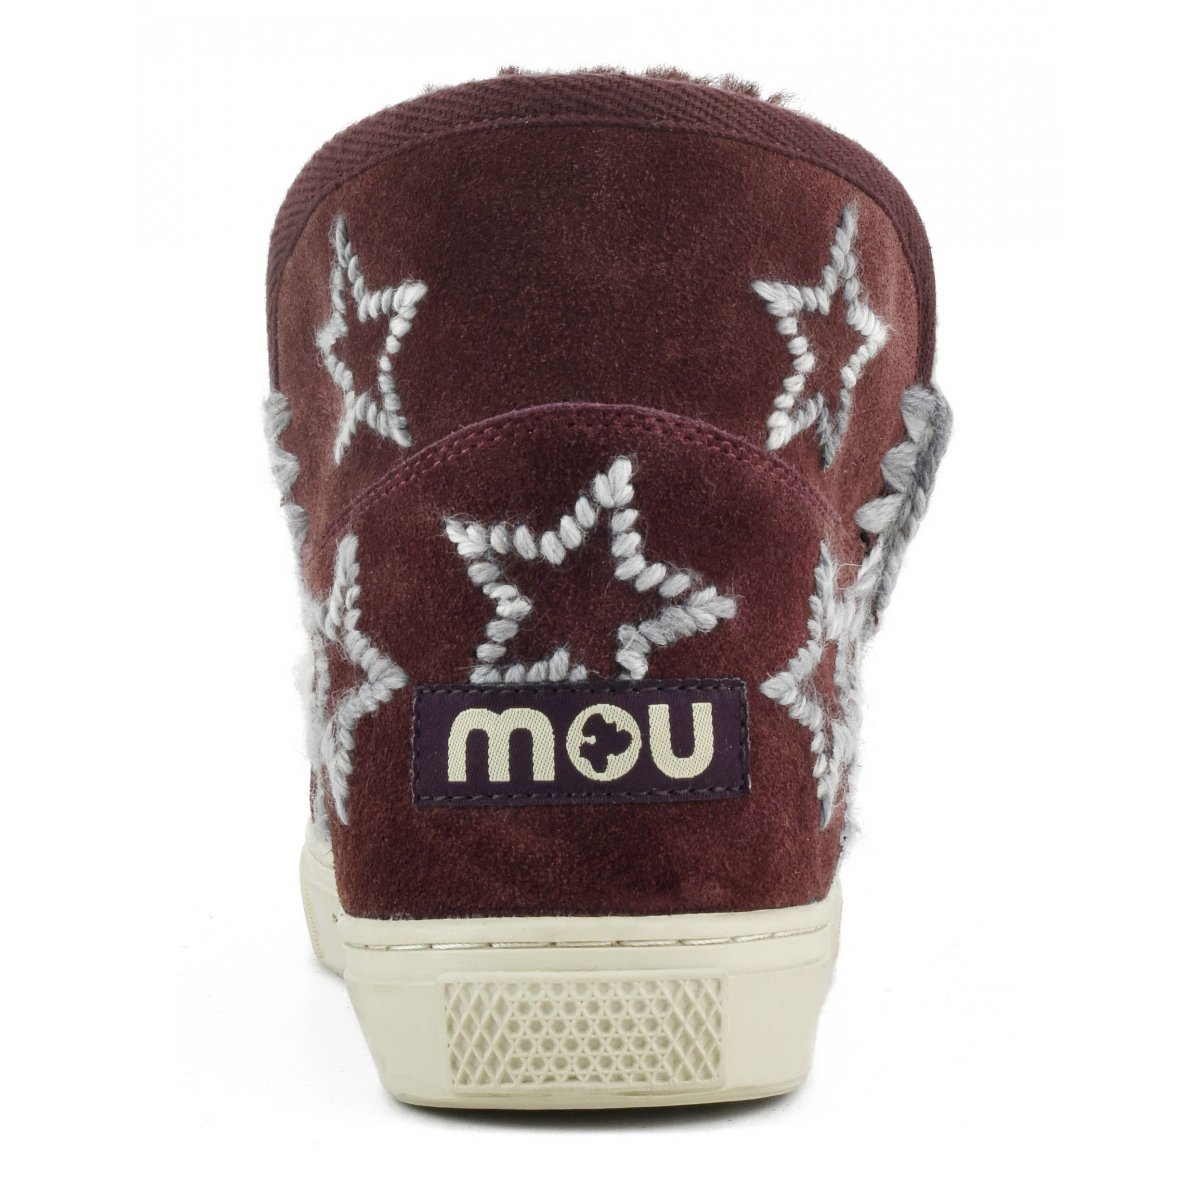 Eskimo sneaker wool stars embroidery NPOR img 4